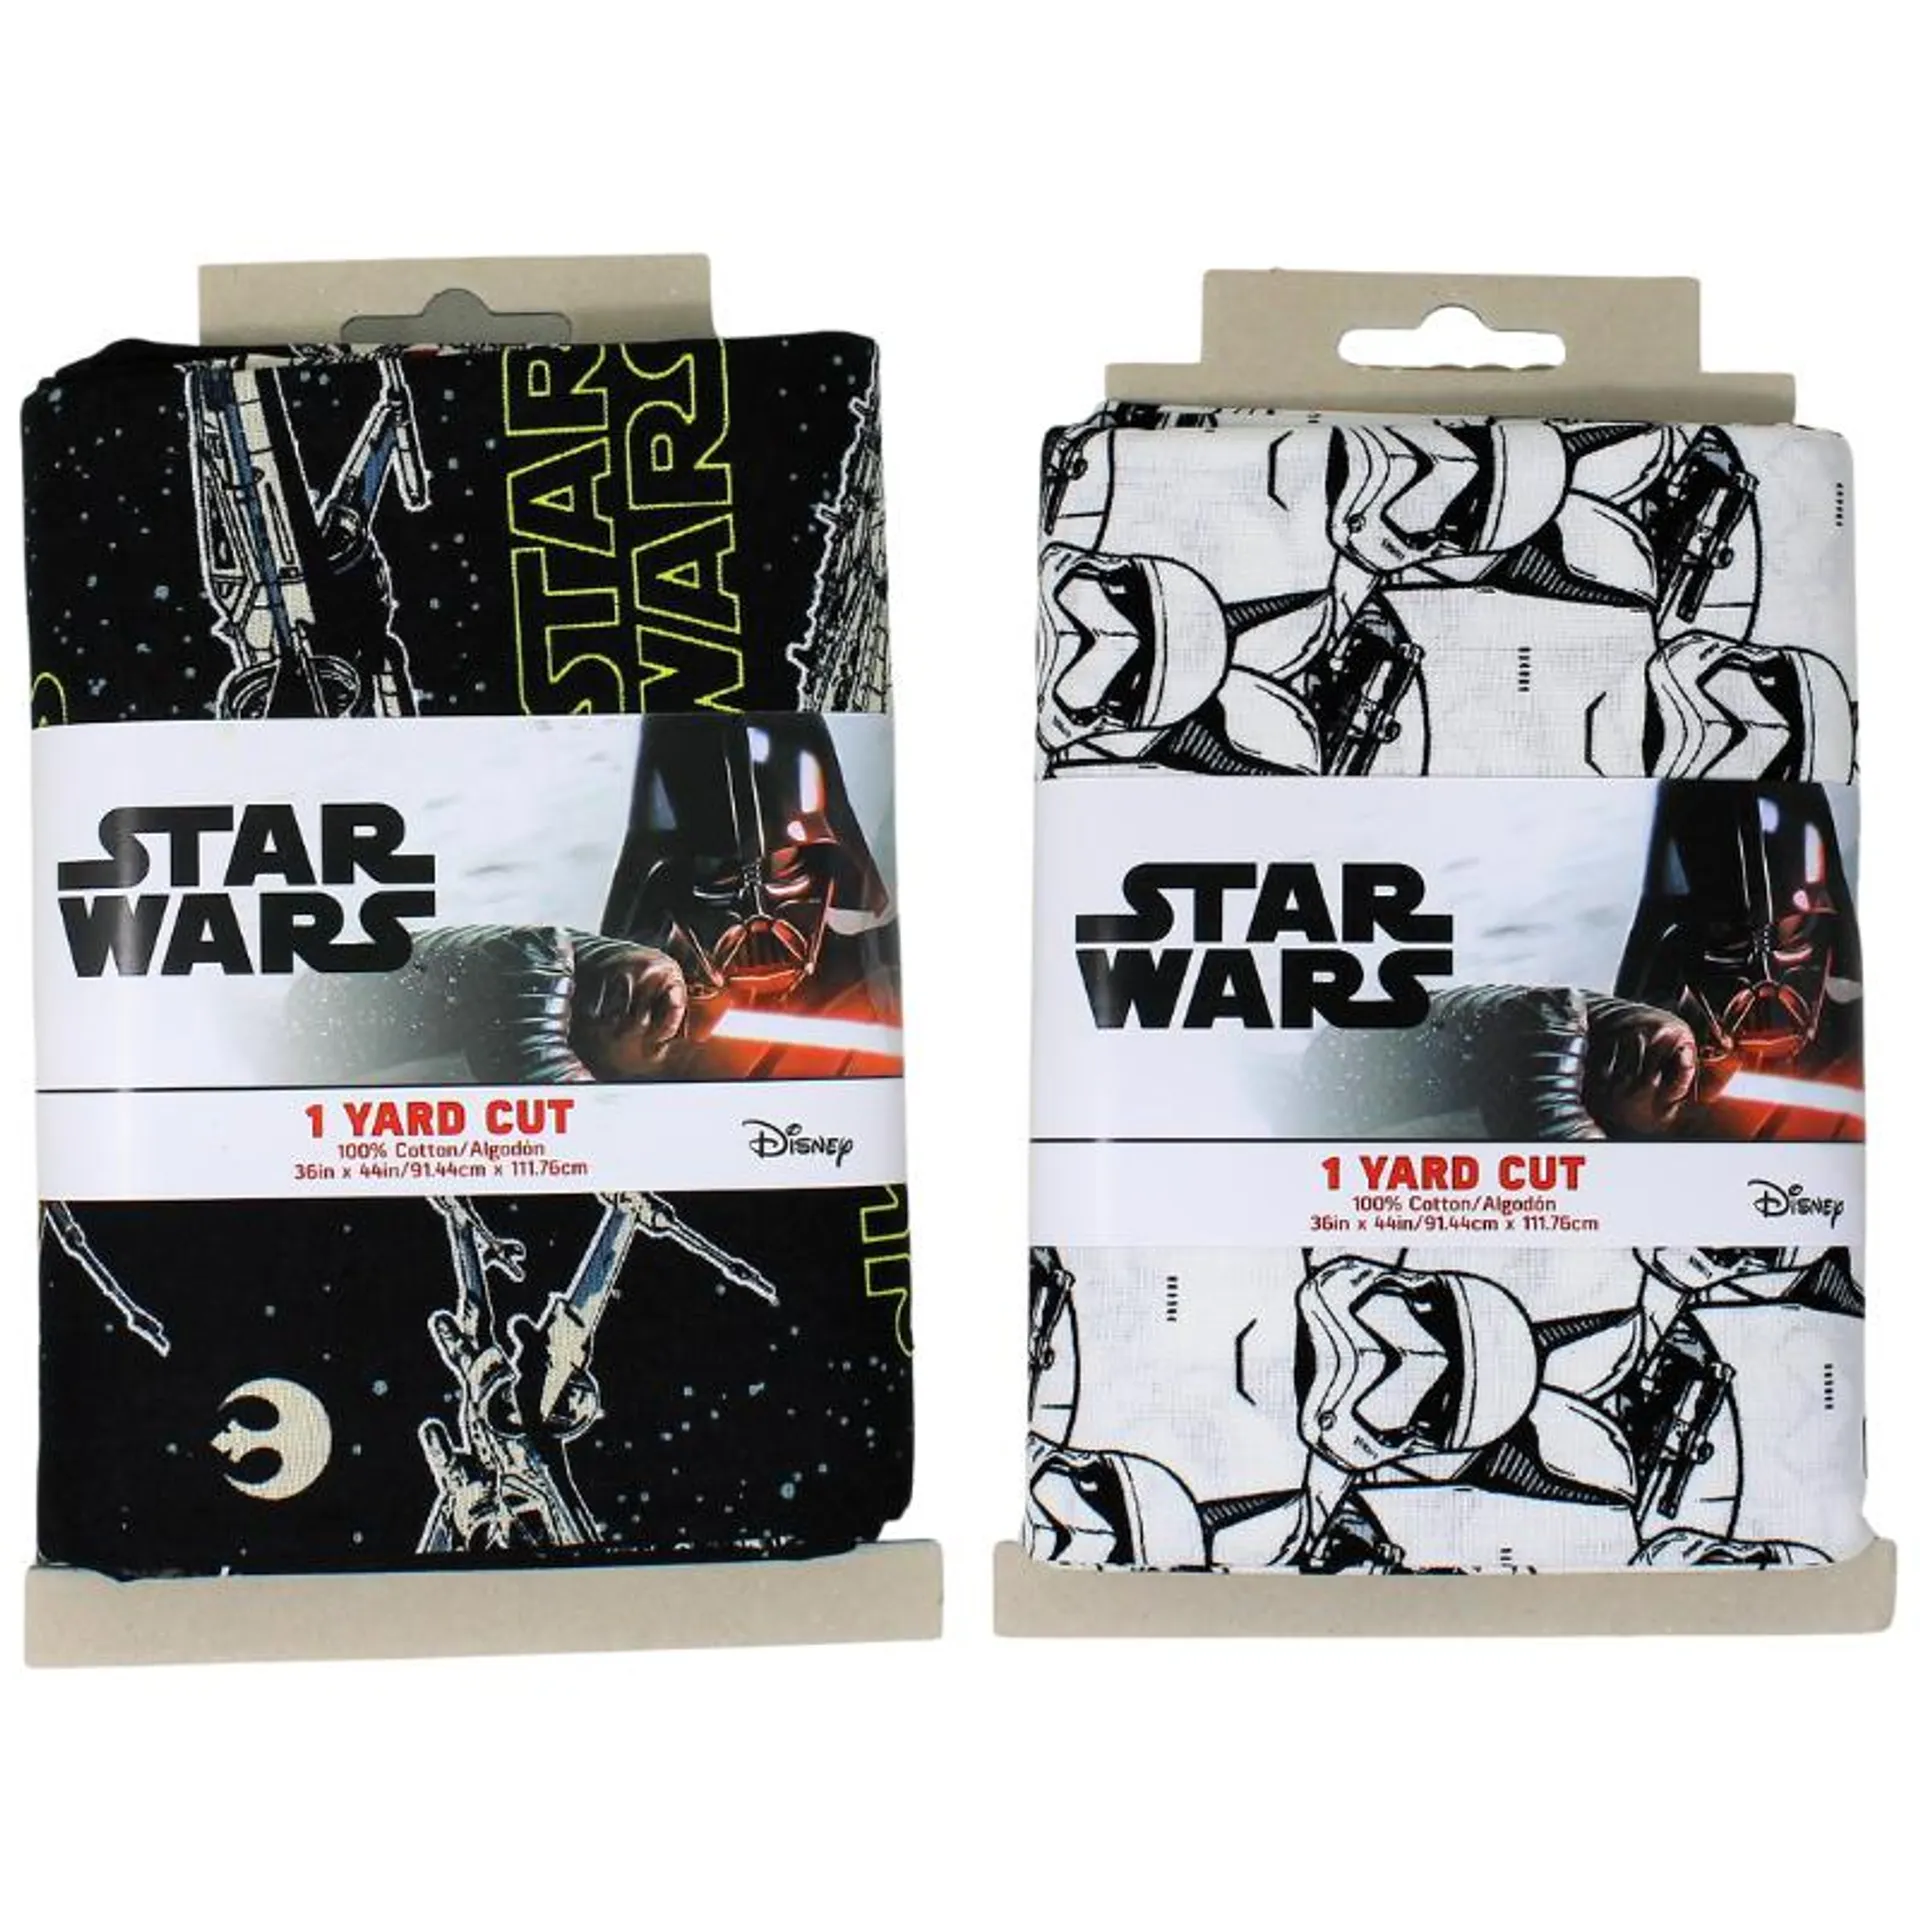 1 Yard Pre-Cut Star Wars Fabric - 36" x 44" - 100% Cotton